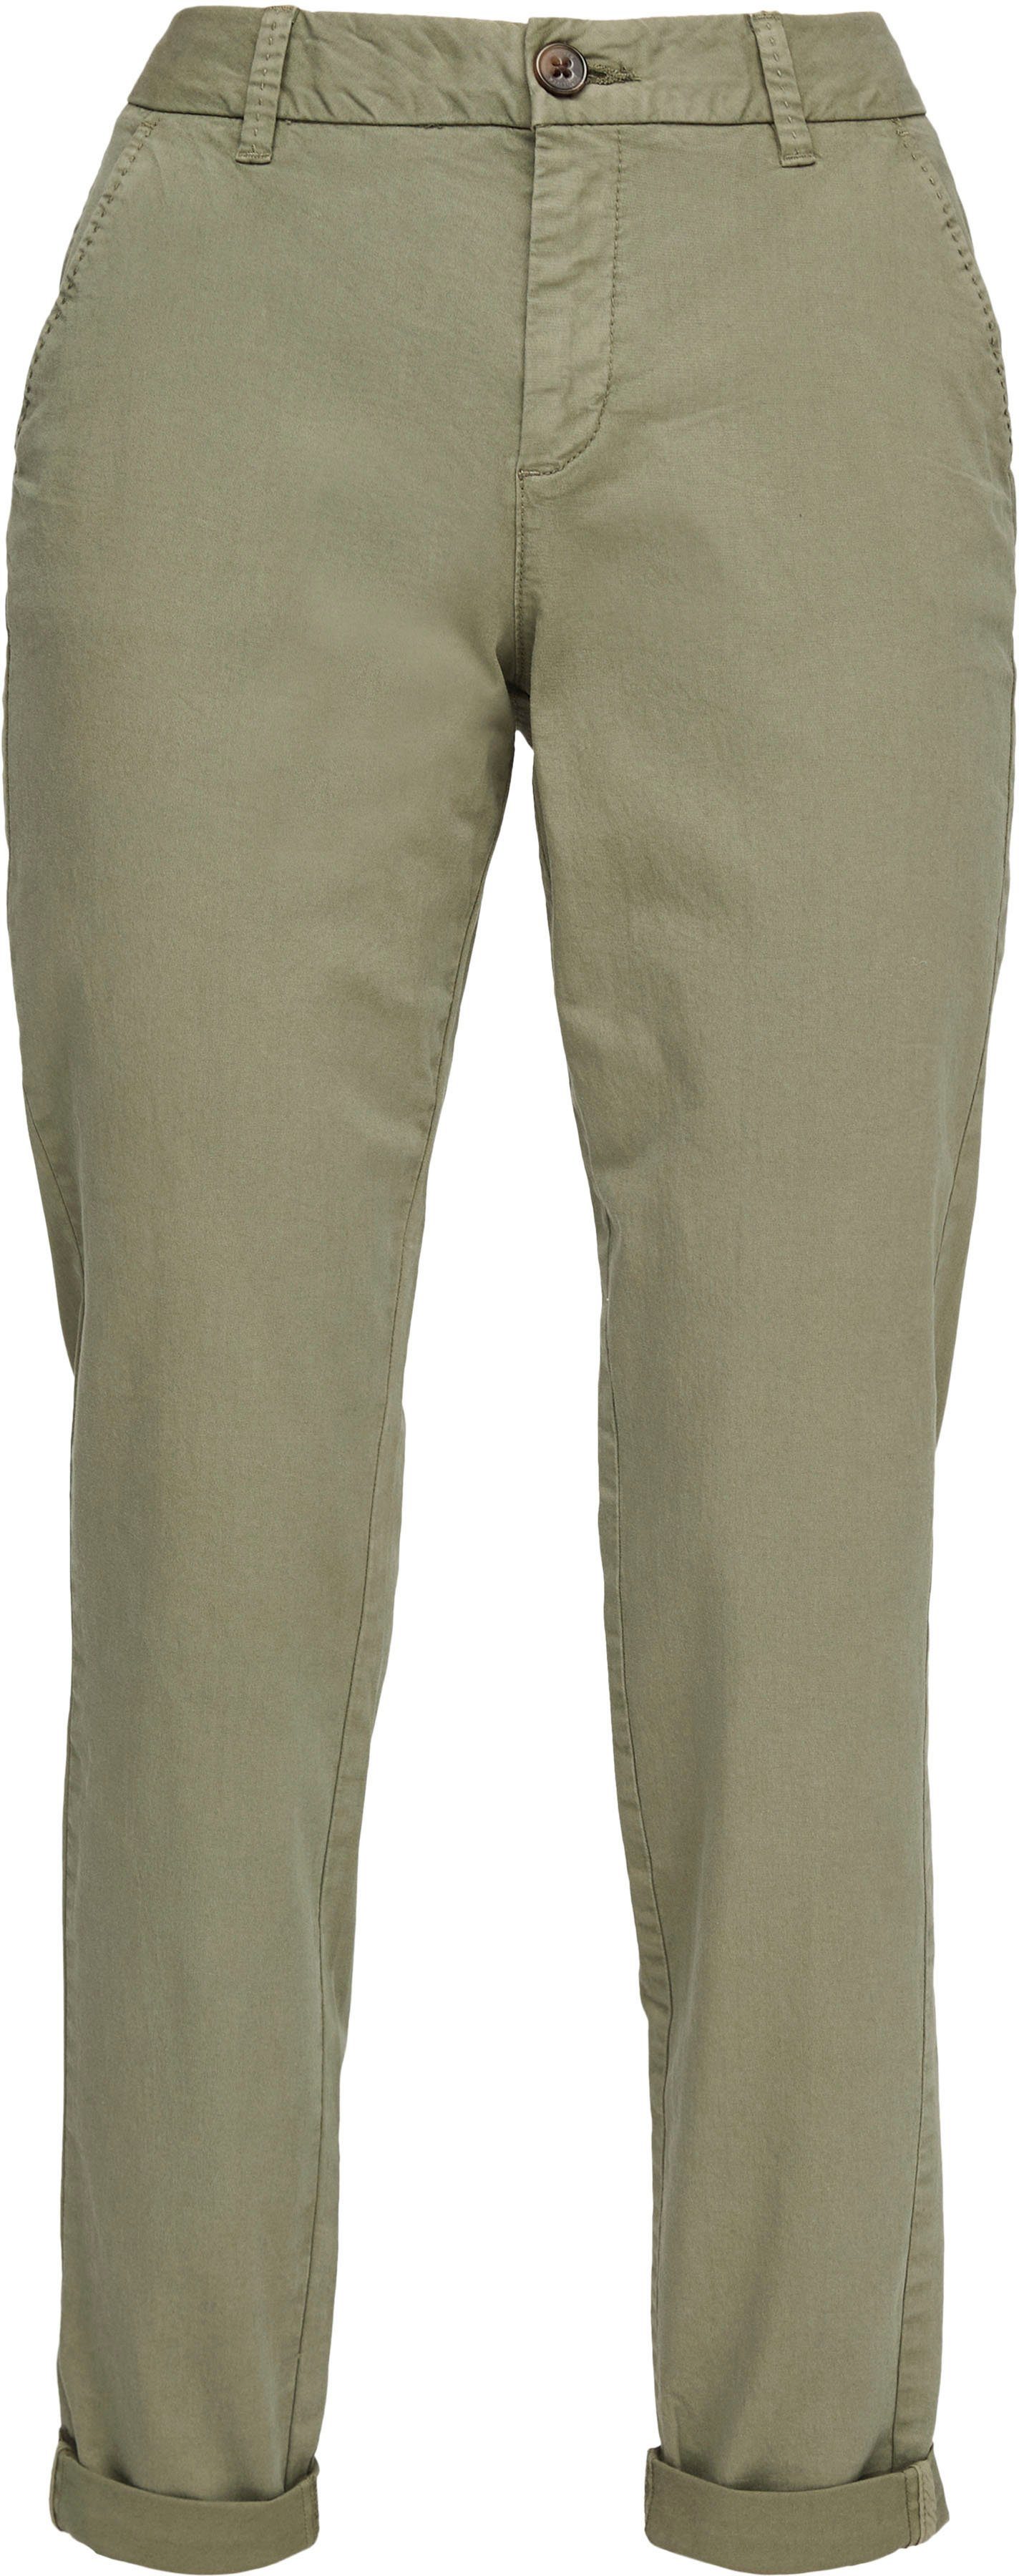 Chinohose light-khaki s.Oliver mit Beinabschluss individuell krempelbarem